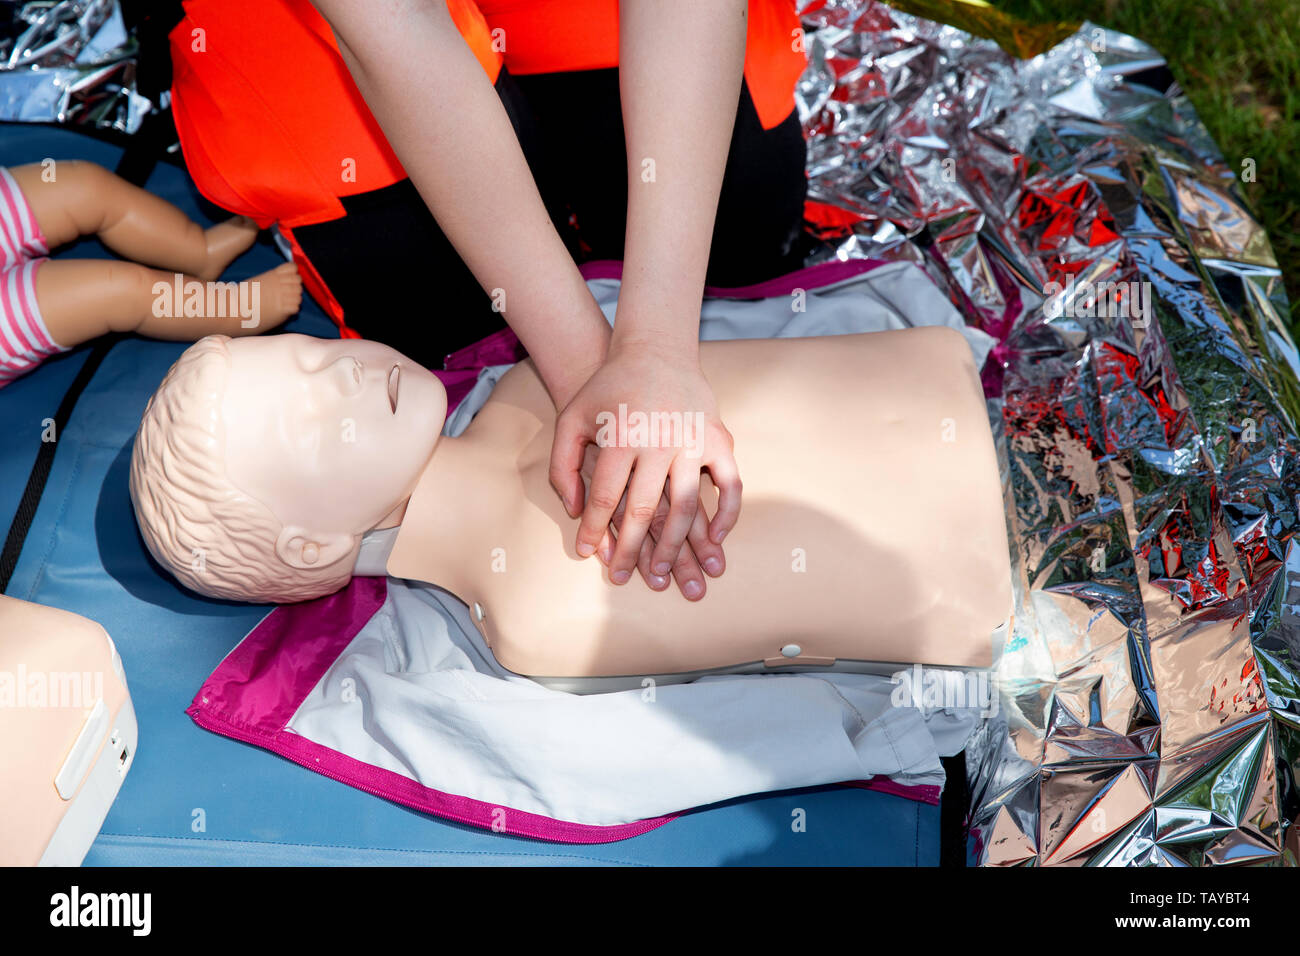 First aid training,resuscitation demonstration Stock Photo